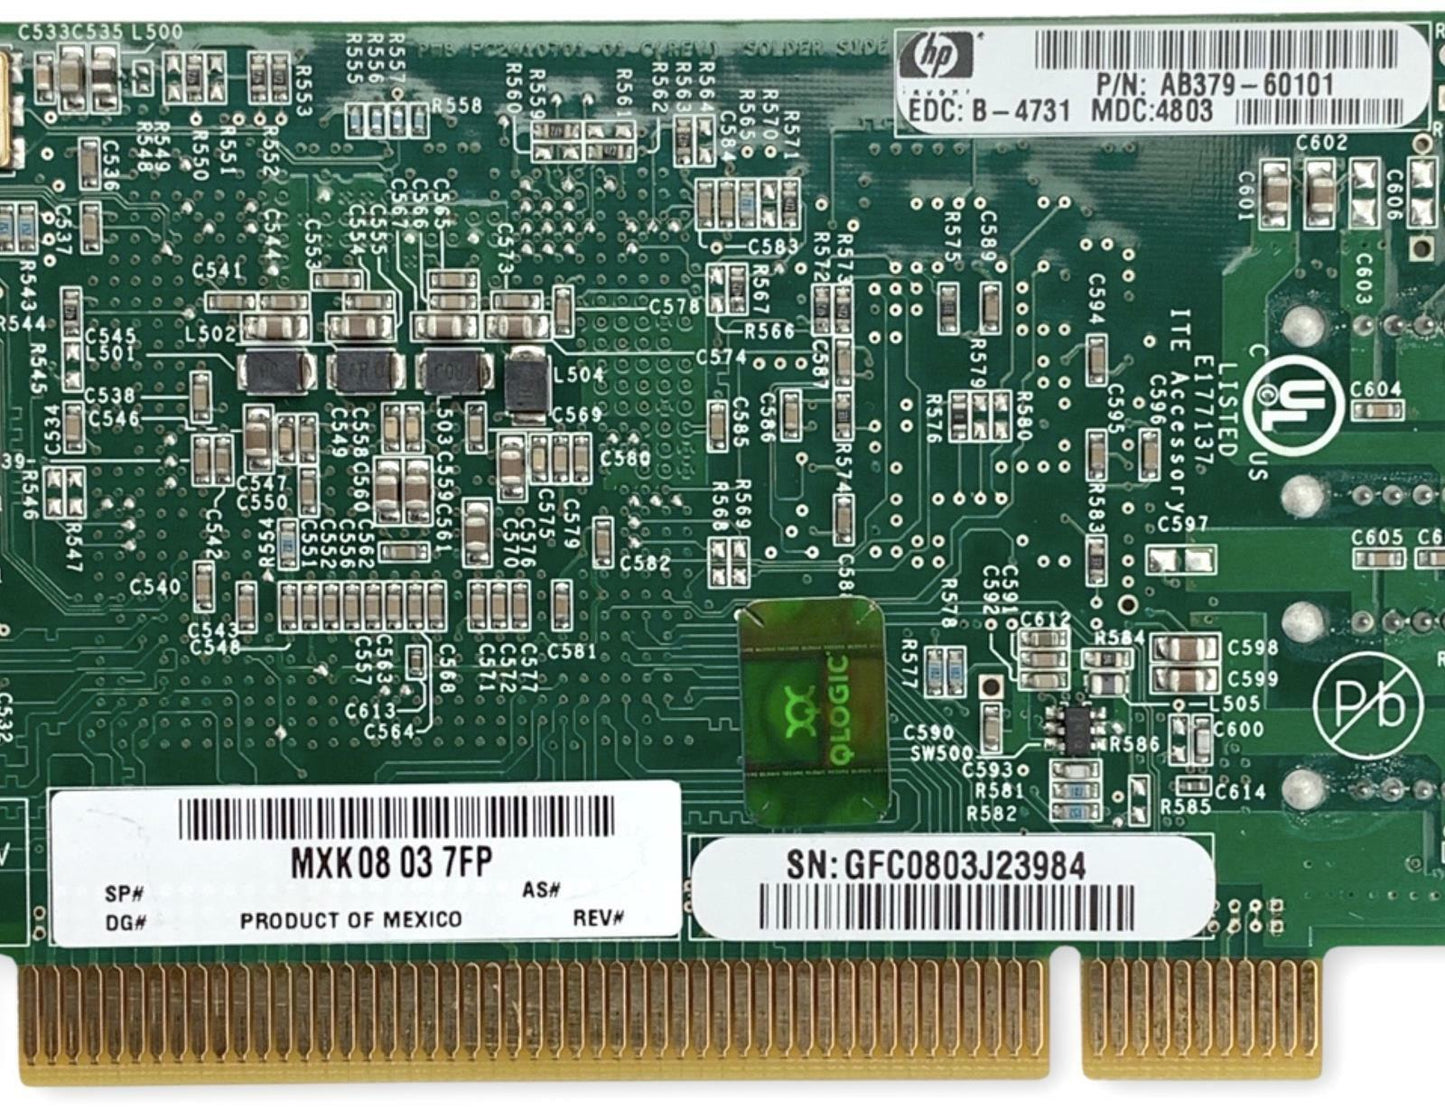 QLogic PCI X-266 2.0 4Gb FC Dual Port Fibre Channel Adapter Card